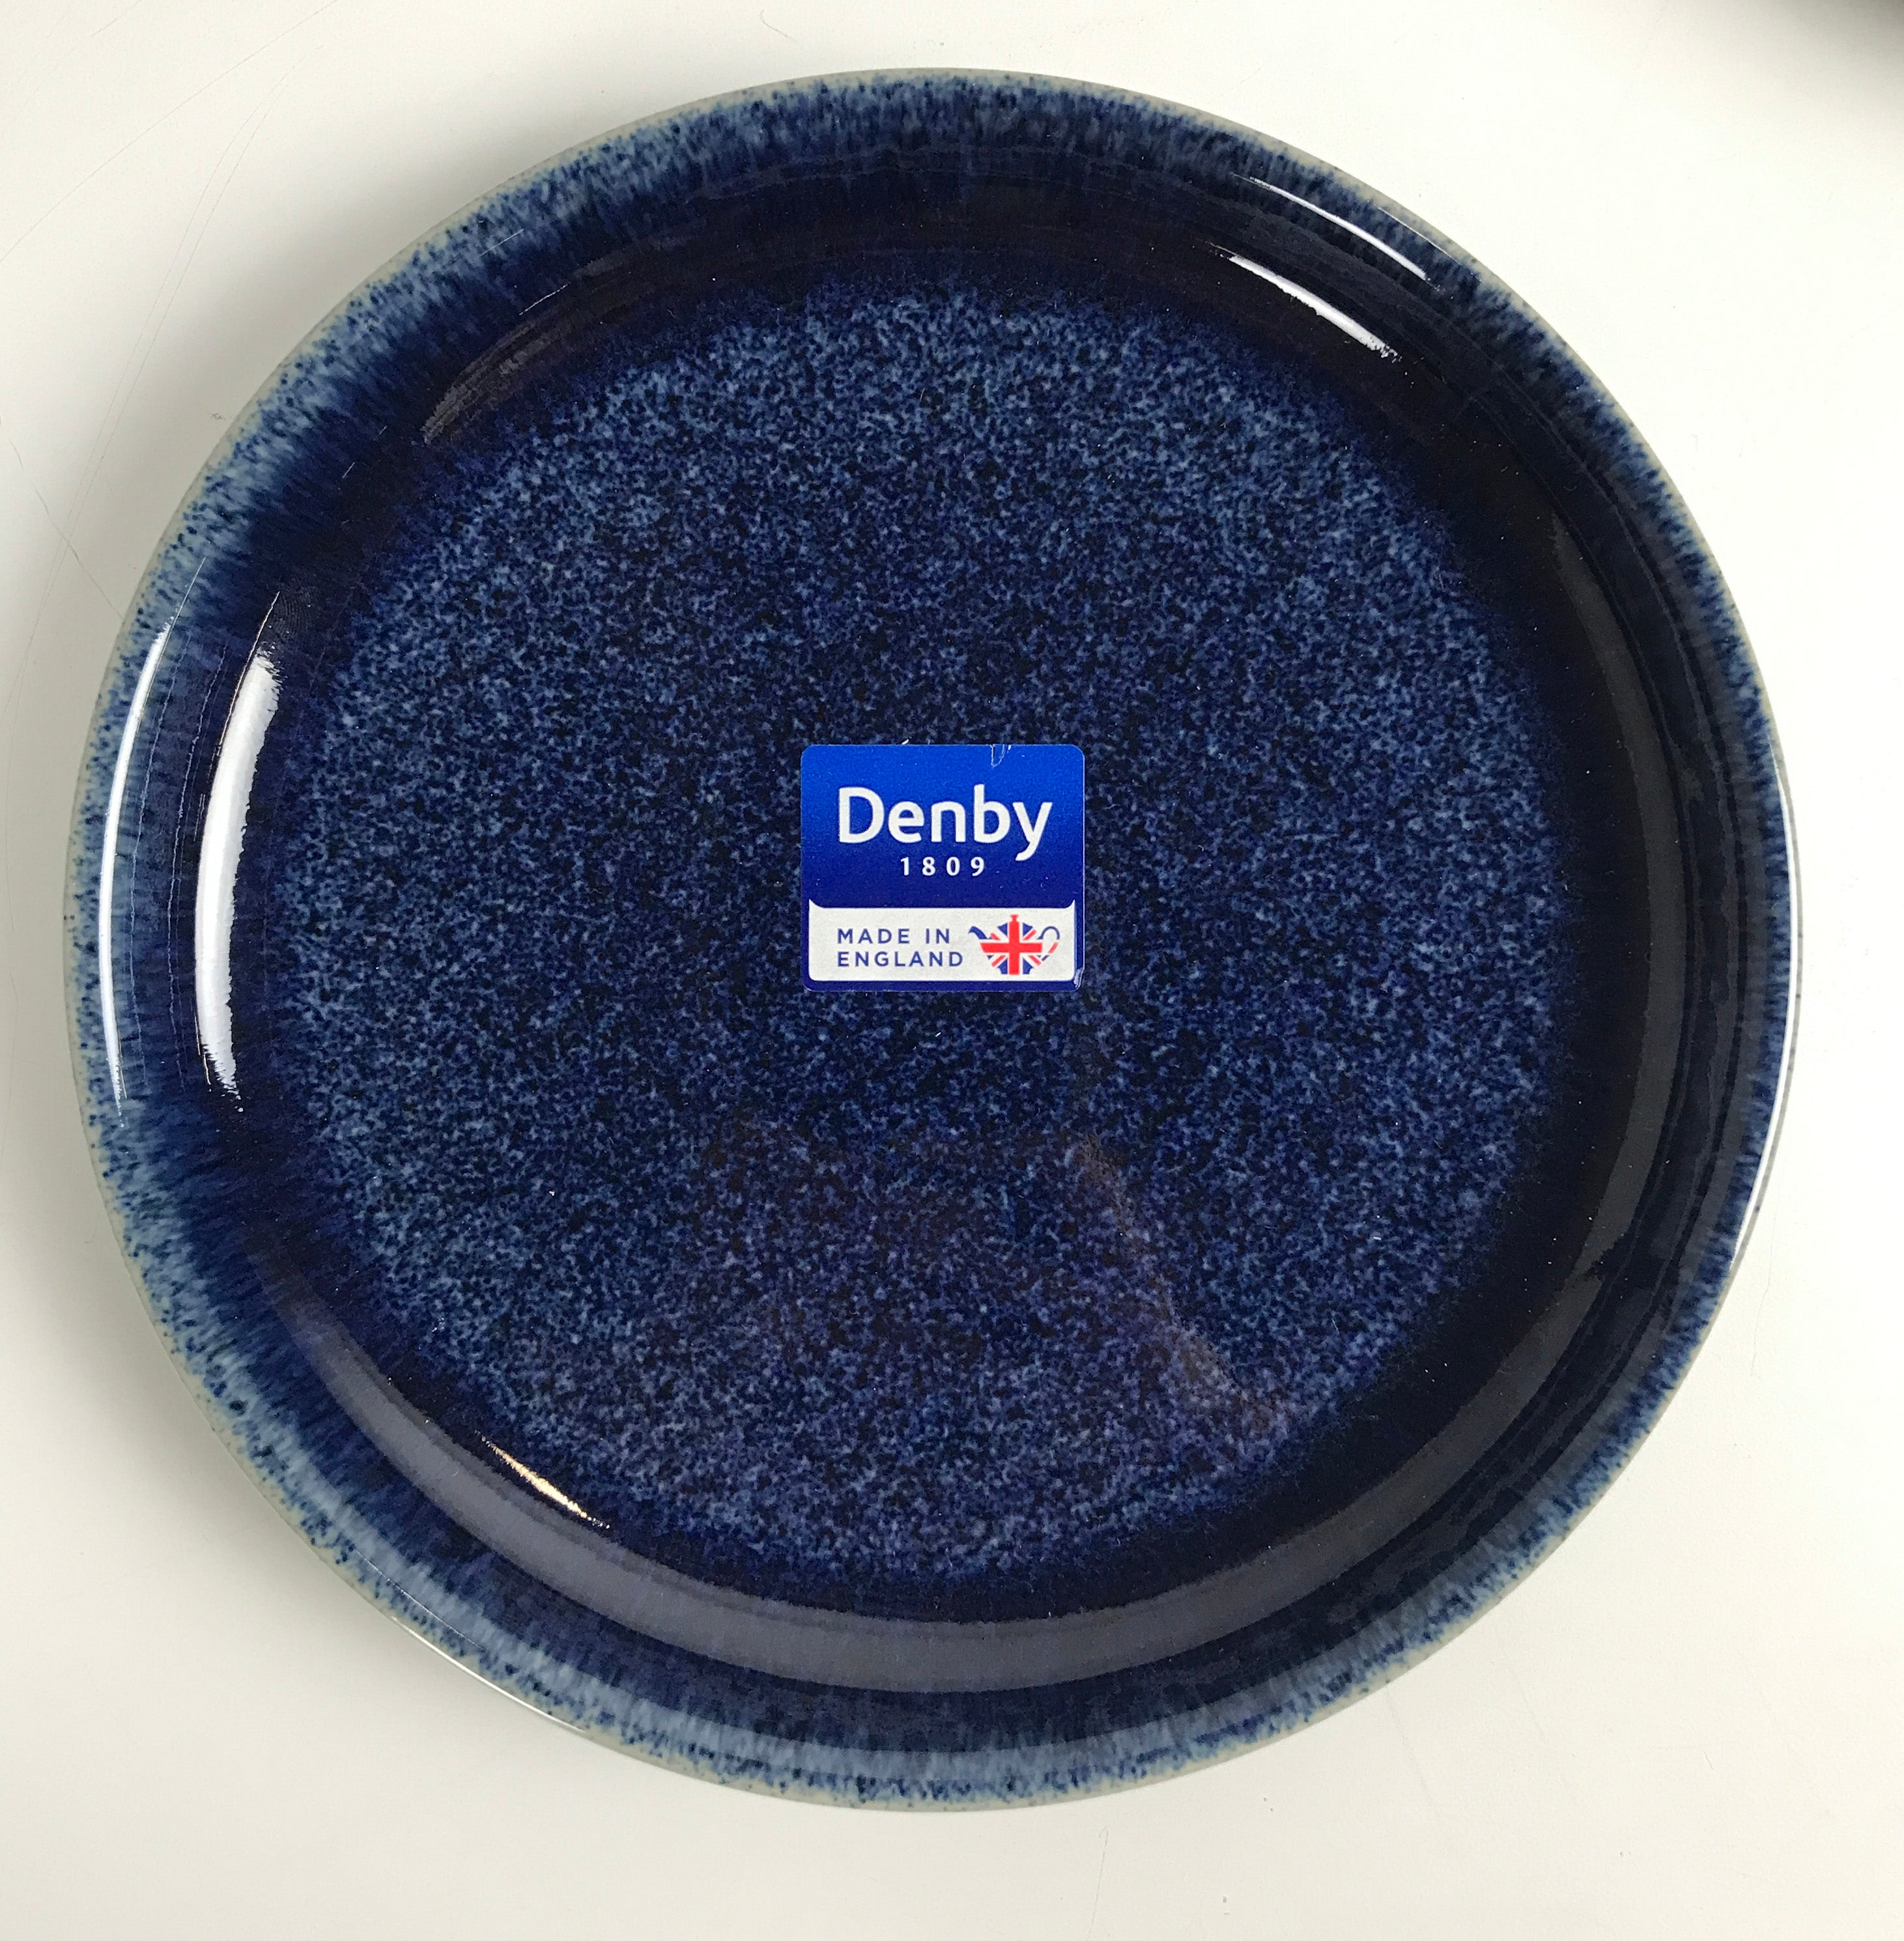 Lot of 3 Denby Plates